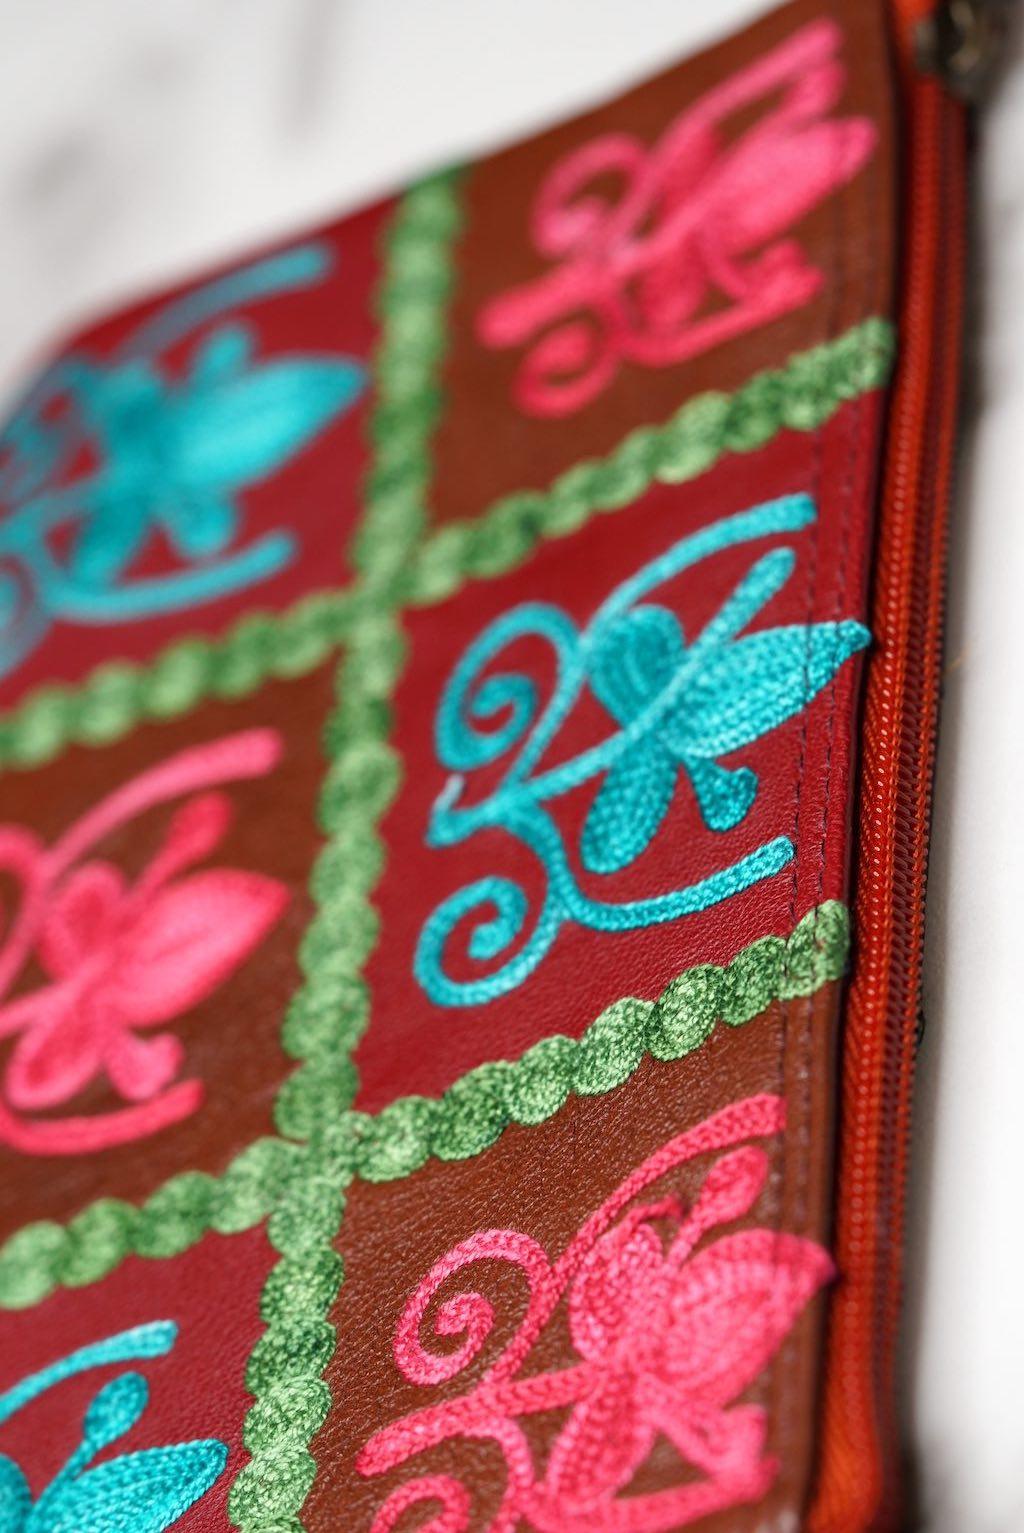 Everyday purse with beautiful handmade cashmere embroidery,  boho style wristlet purse.